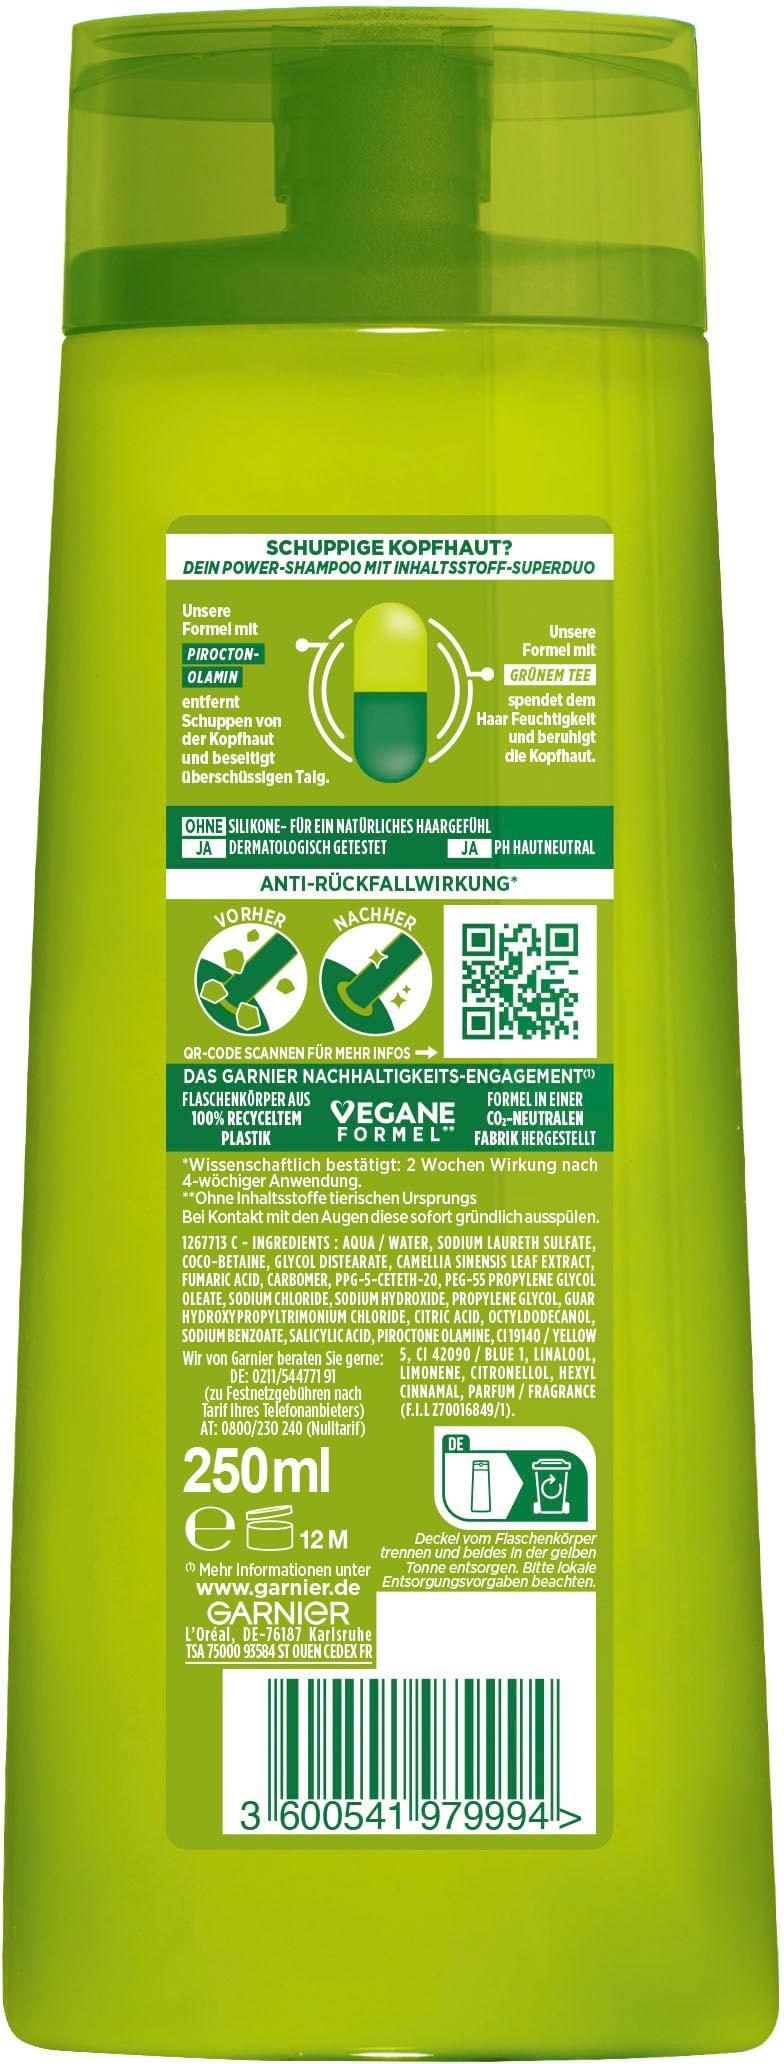 GARNIER Haarshampoo »Garnier Fructis Anti-Schuppen Shampoo«